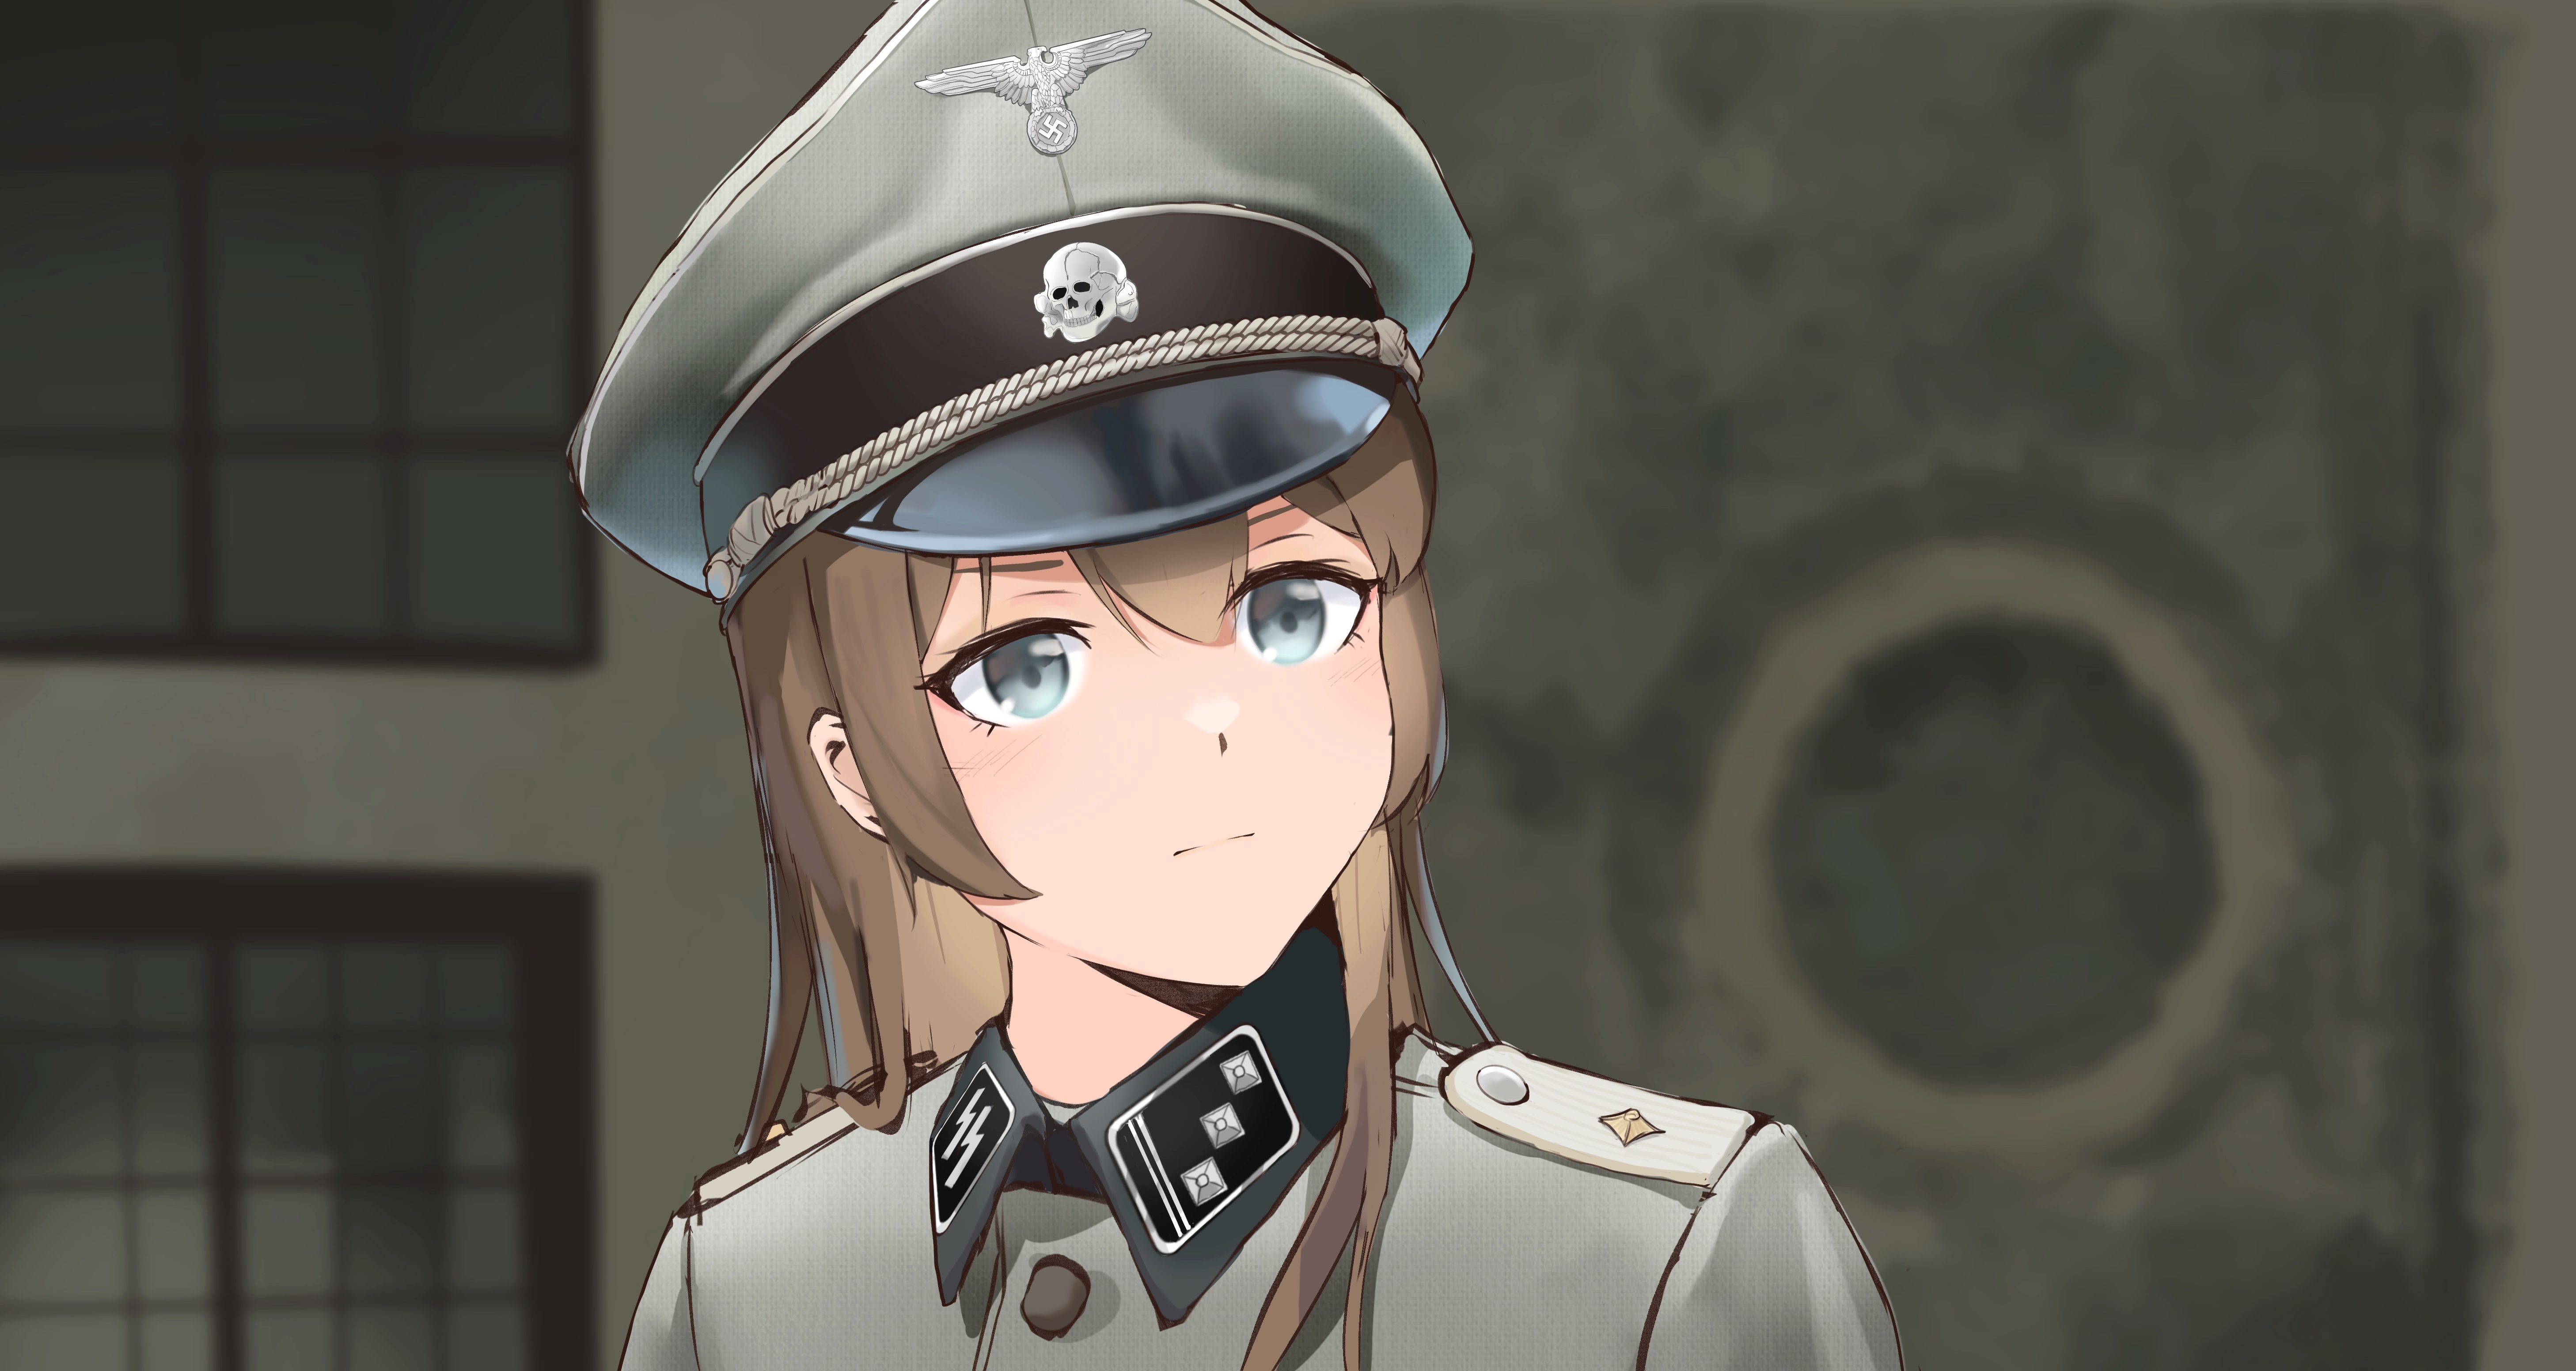 Original Characters Anime Girls Blue Eyes Blonde Long Hair Military Uniform Military Hat Hat Peaked  5831x3104